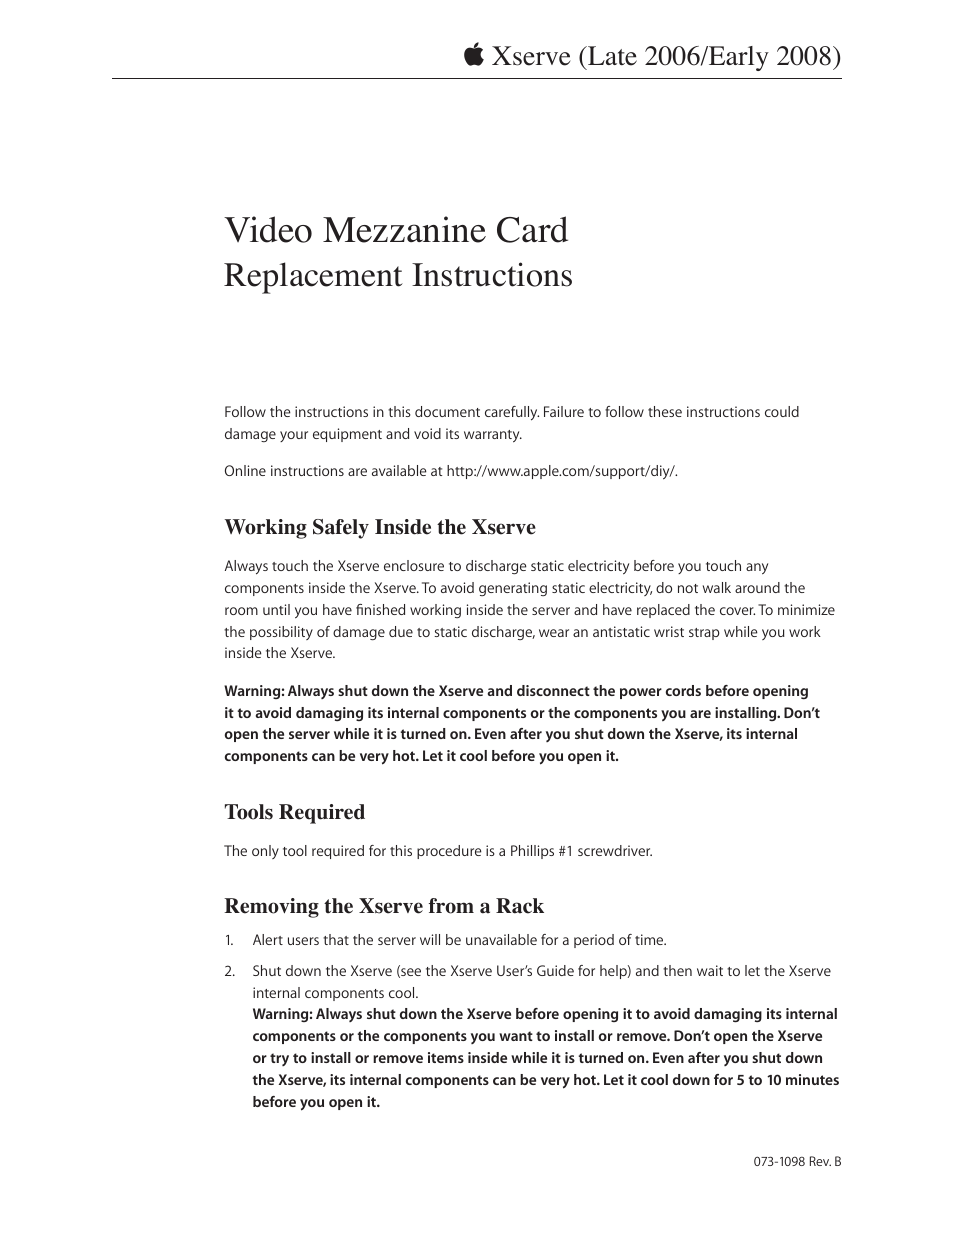 Xserve (Early 2008) DIY Procedure for Video Mezzanine Card